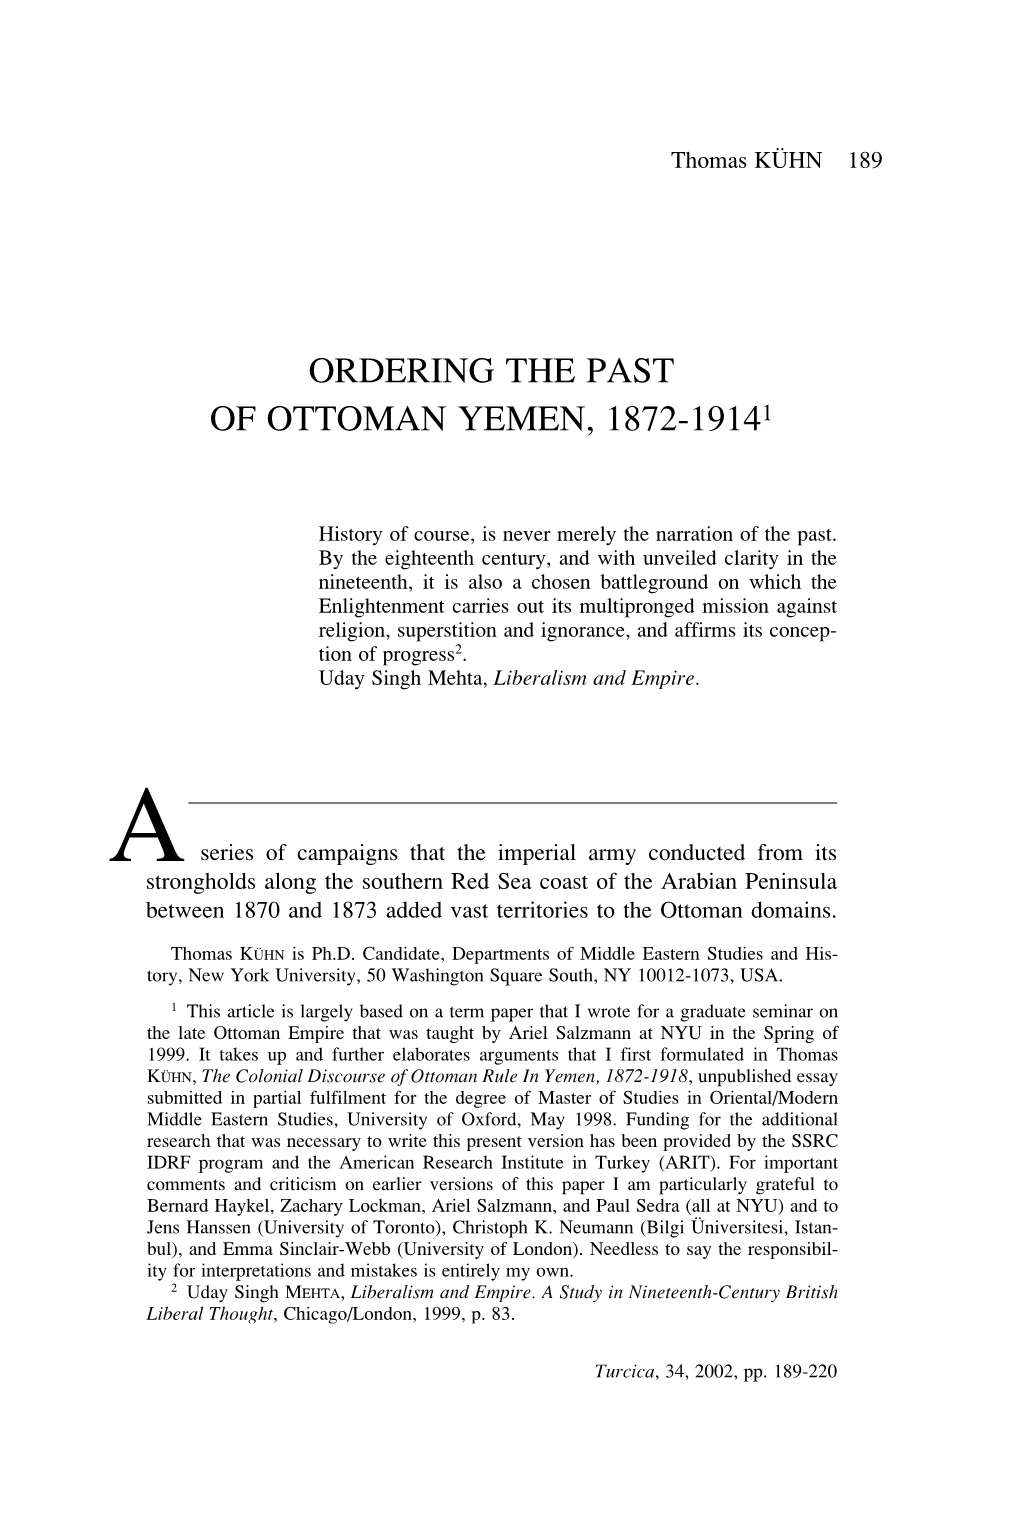 Ordering the Past of Ottoman Yemen, 1872-19141